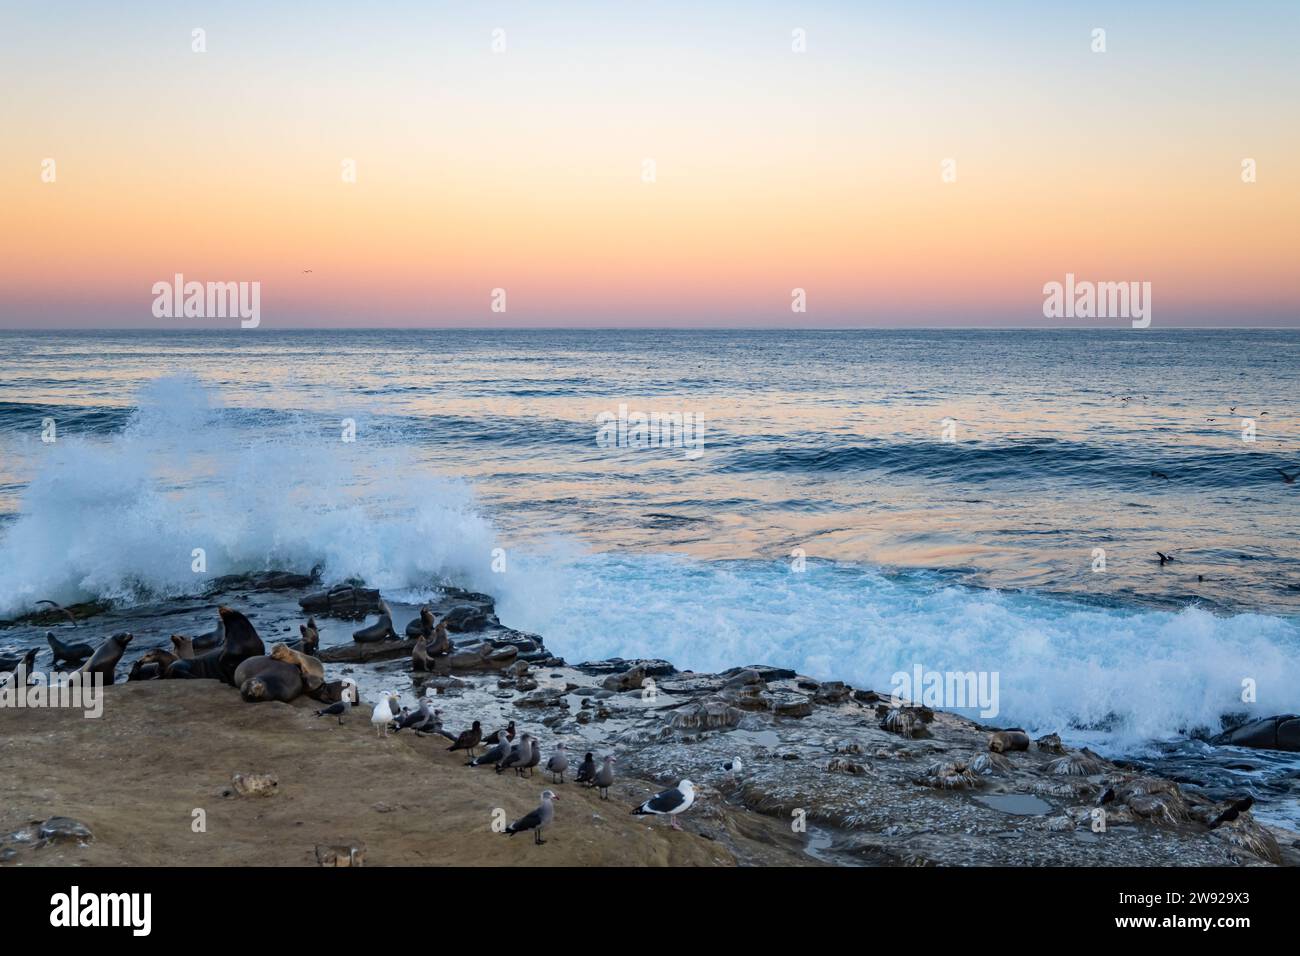 California sea lions (Zalophus californianus) gathering on the rocks along the coast in the morning. San Diego, California, USA. Stock Photo